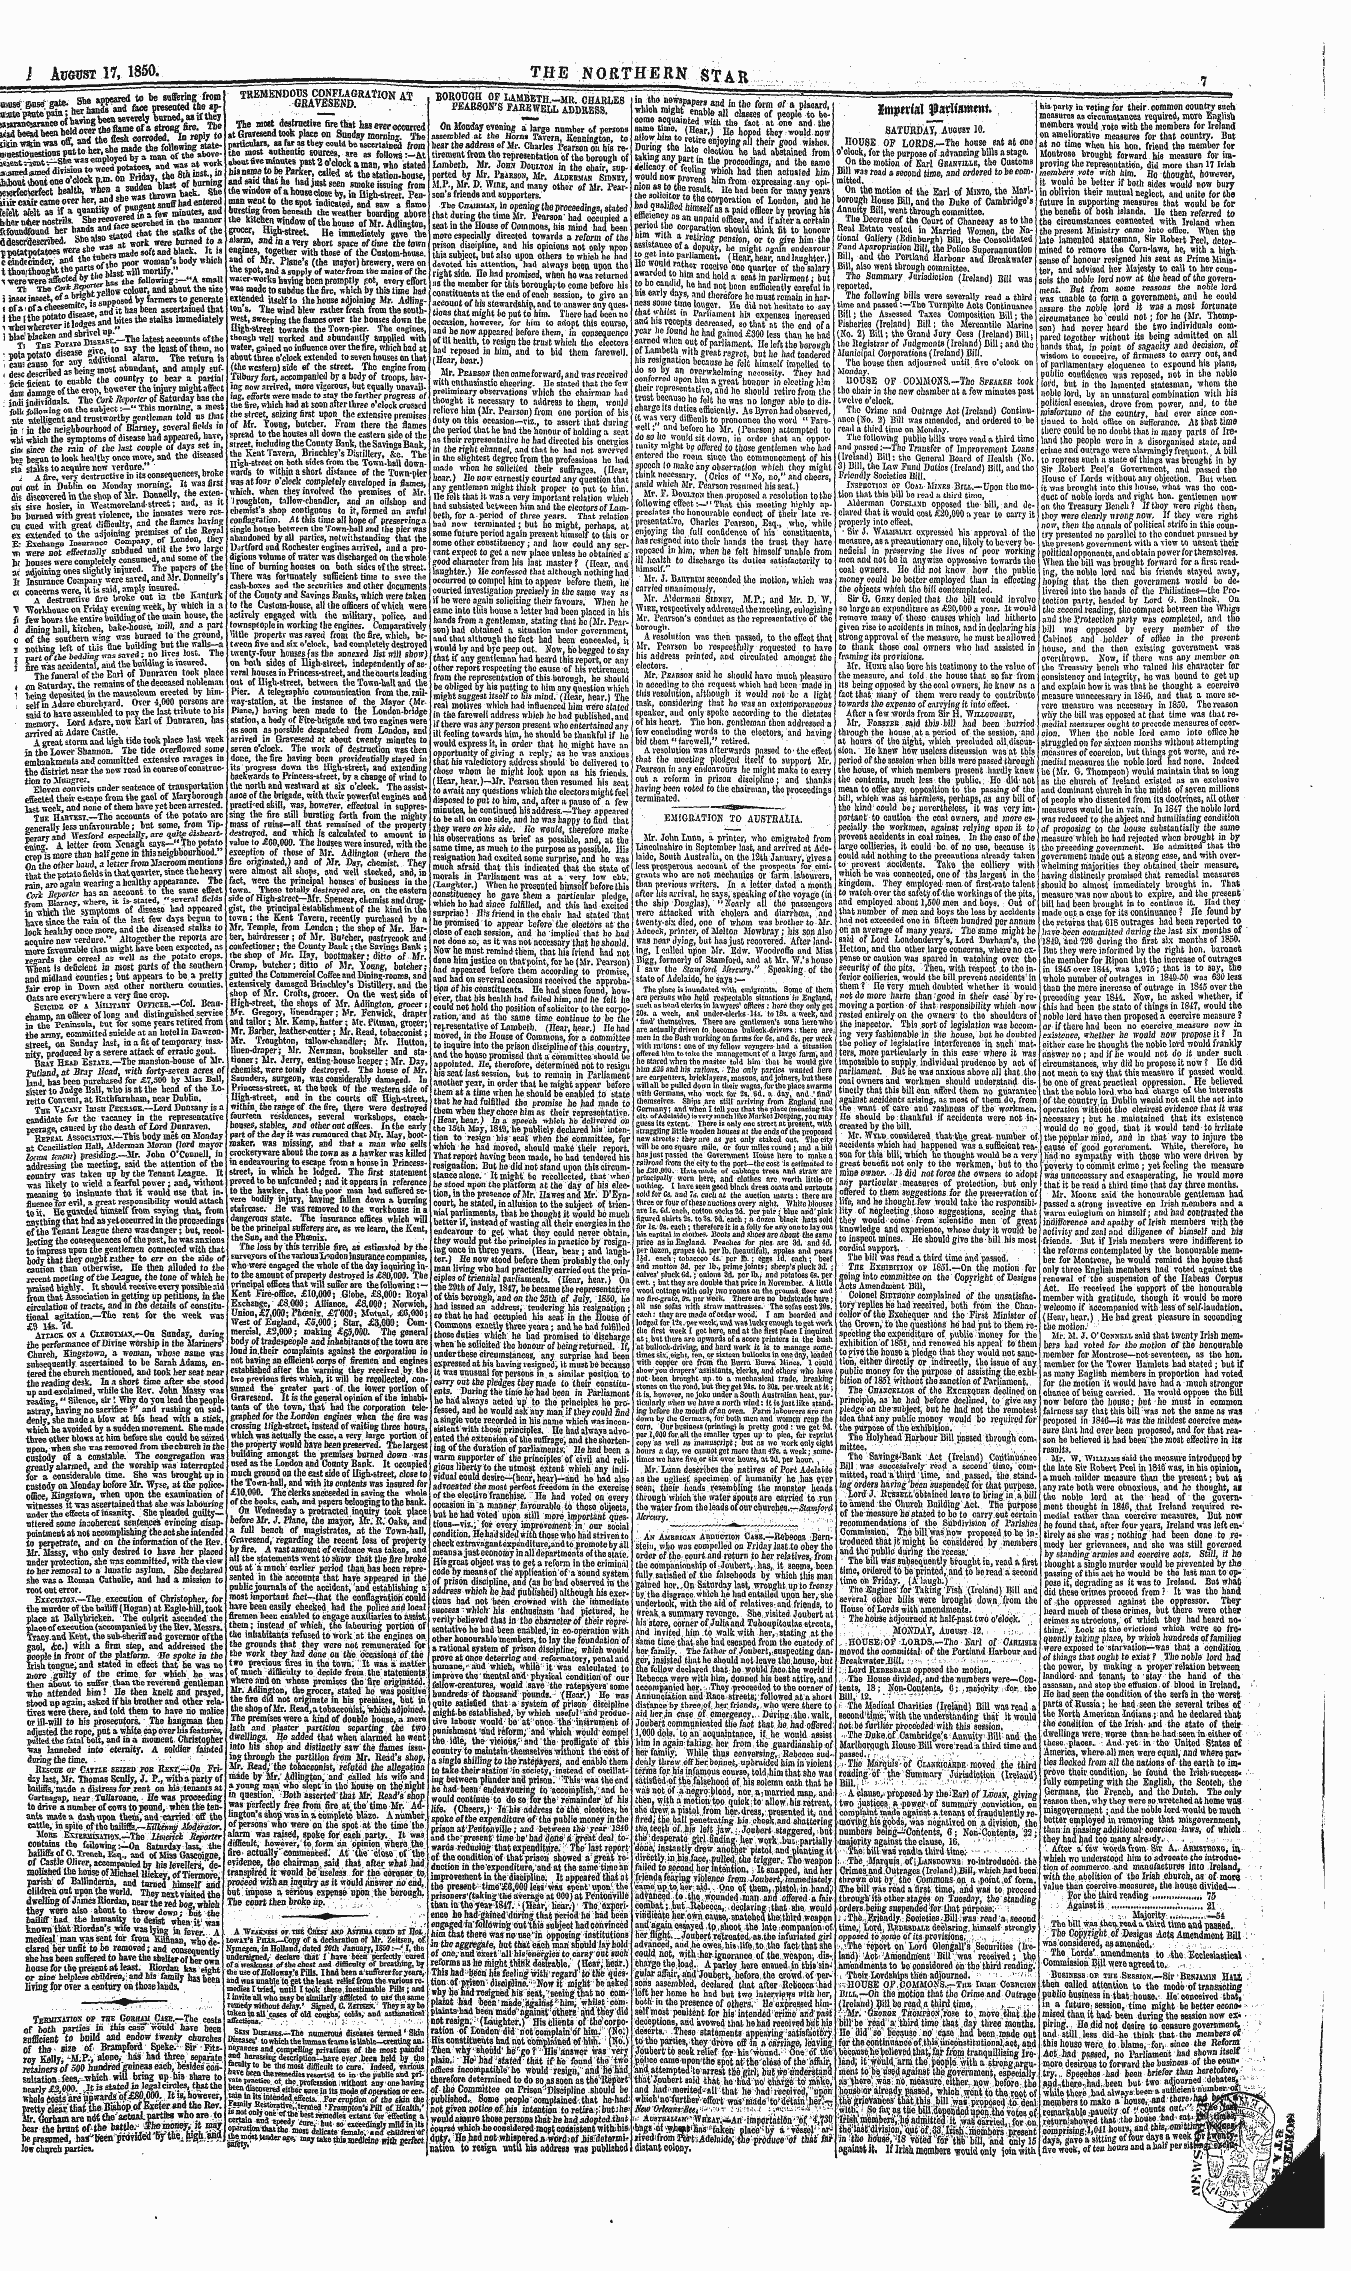 Northern Star (1837-1852): jS F Y, 3rd edition: 7